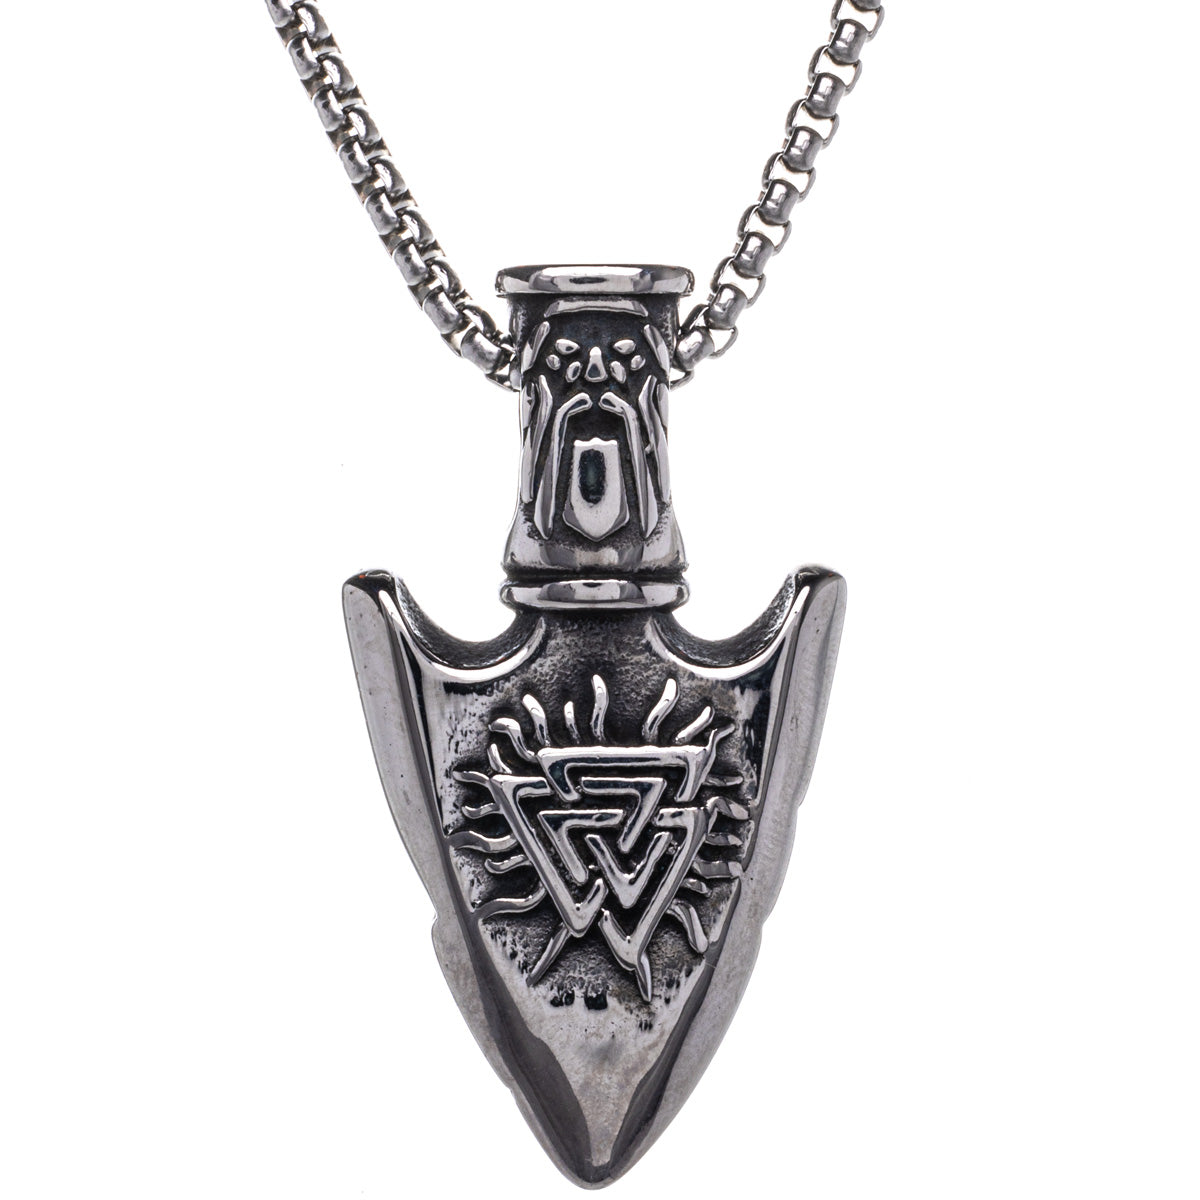 Gungnir Vegvísir spearhead pendant necklace (Steel 316L)